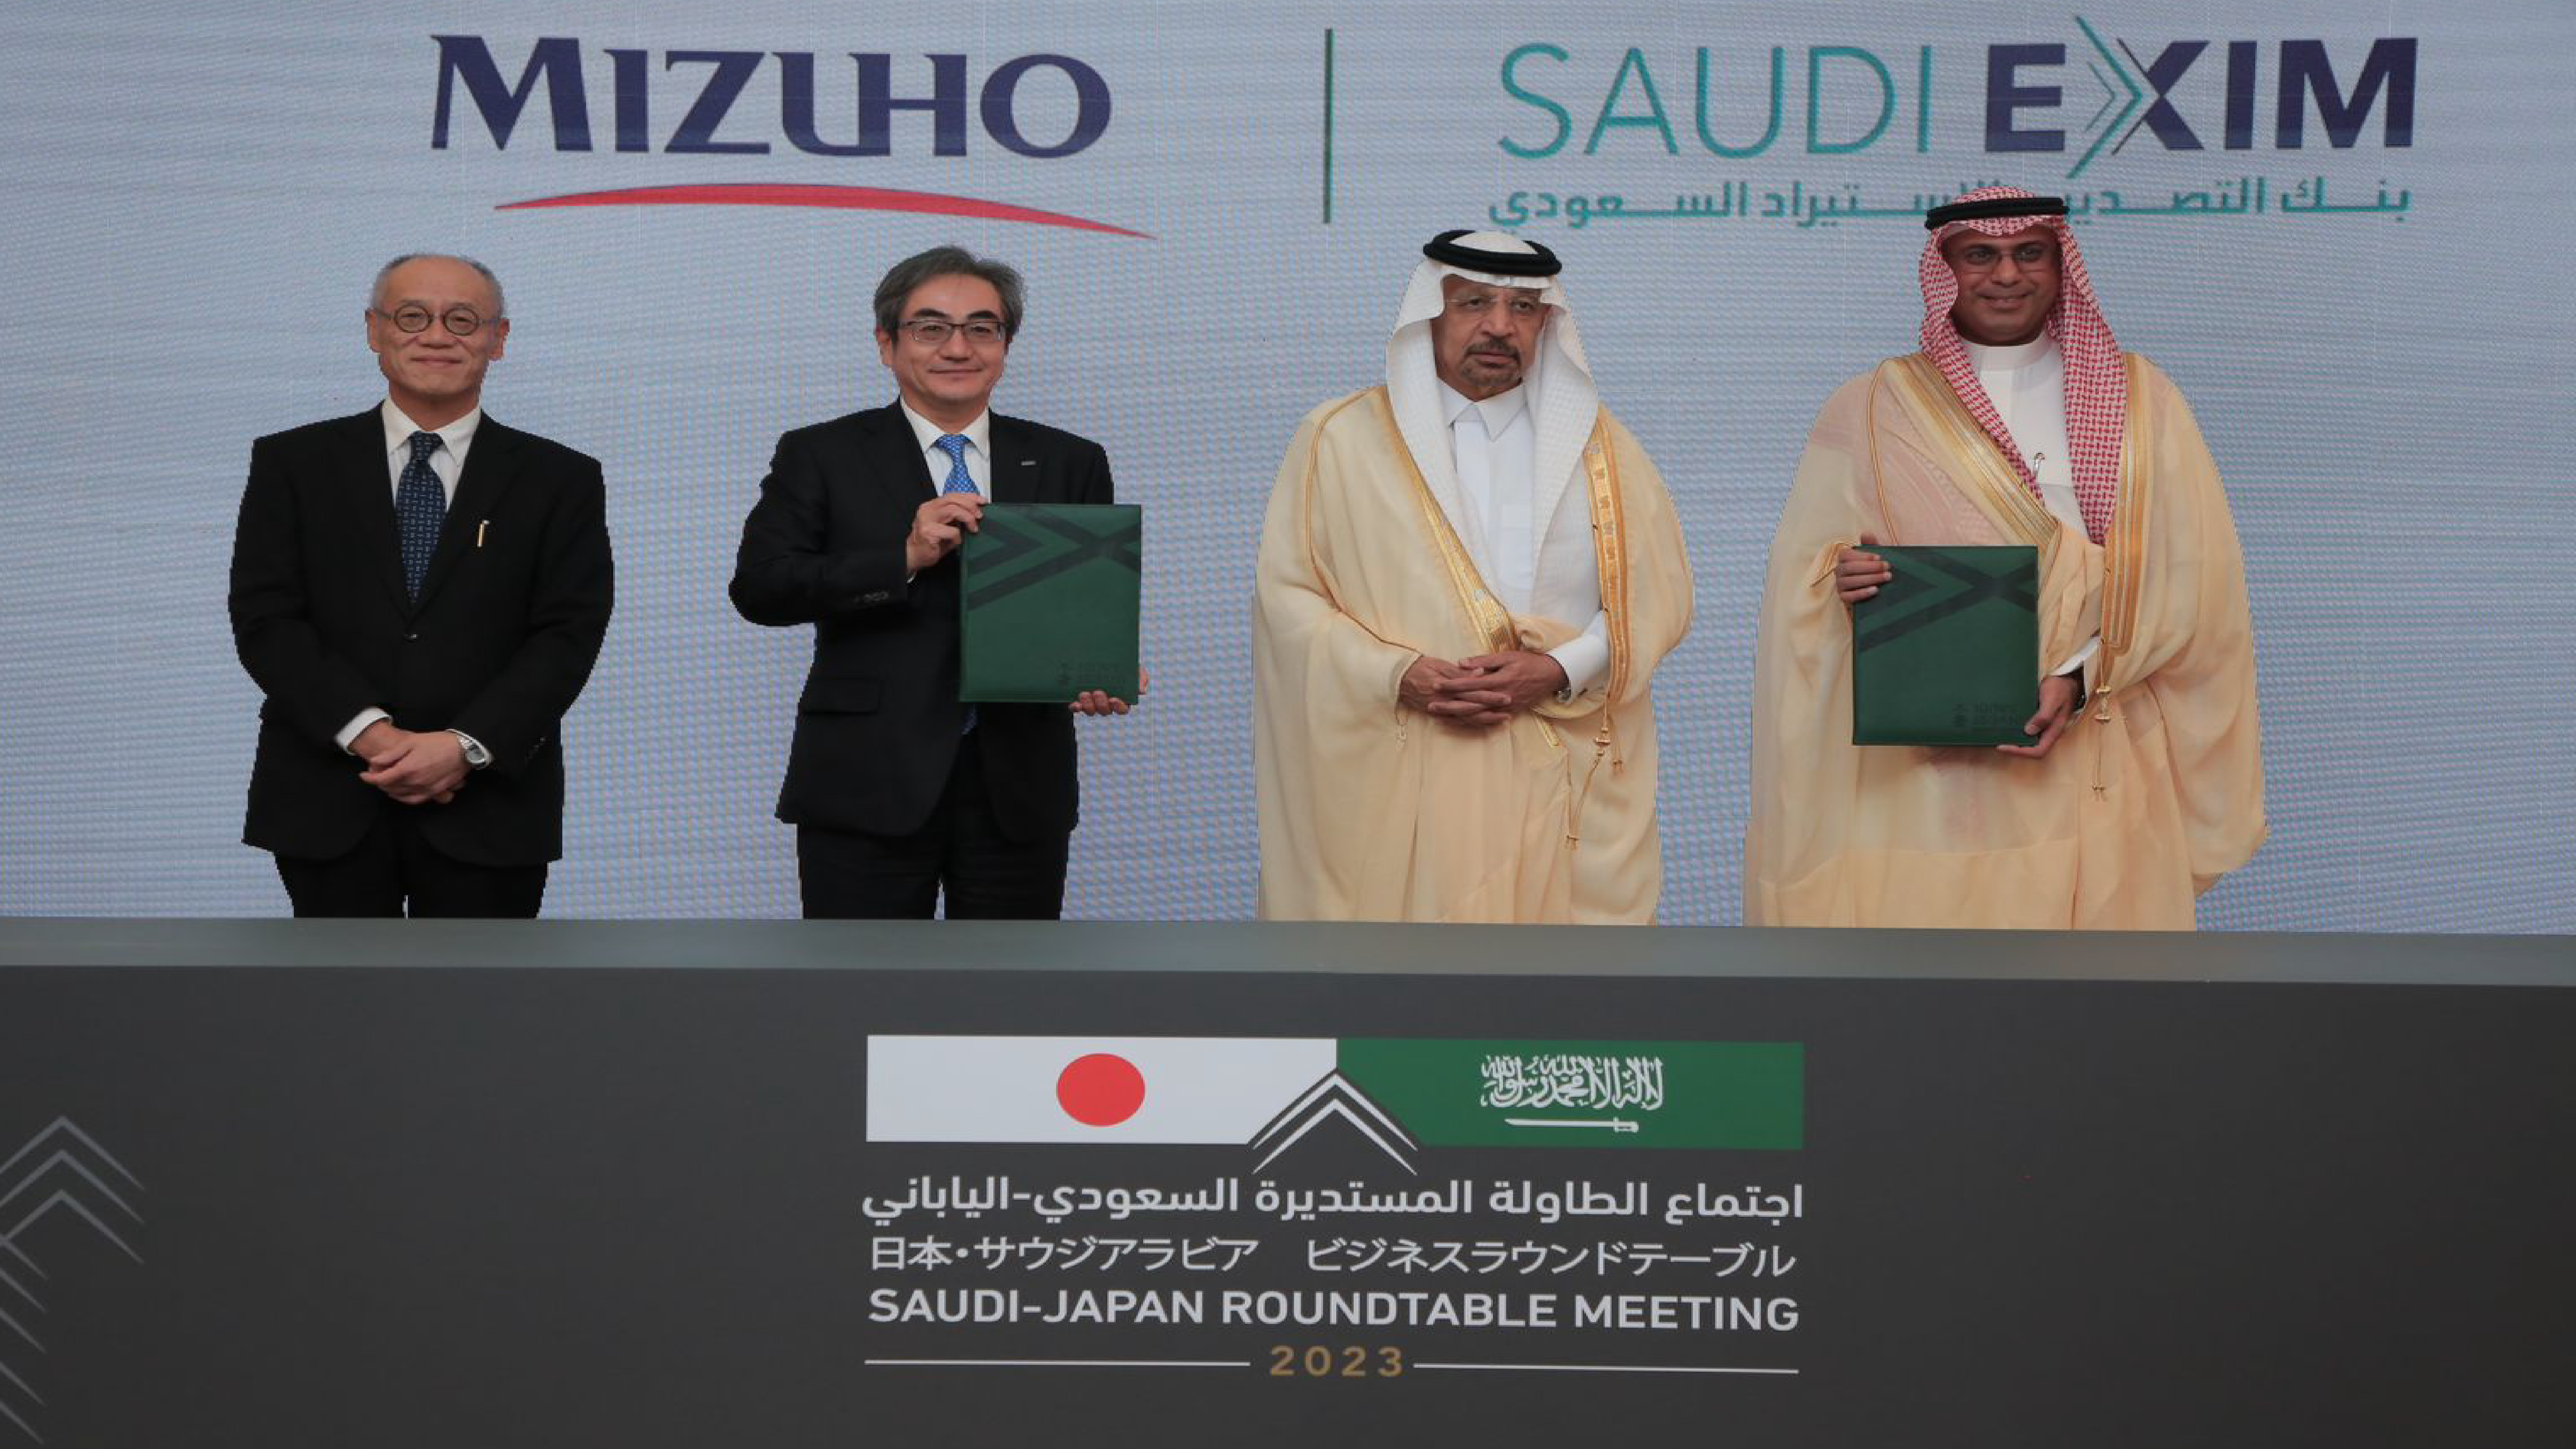 Saudi EXIM signs MoU with Japan's Mizuho Bank during the Saudi - Japanese roundtable meeting